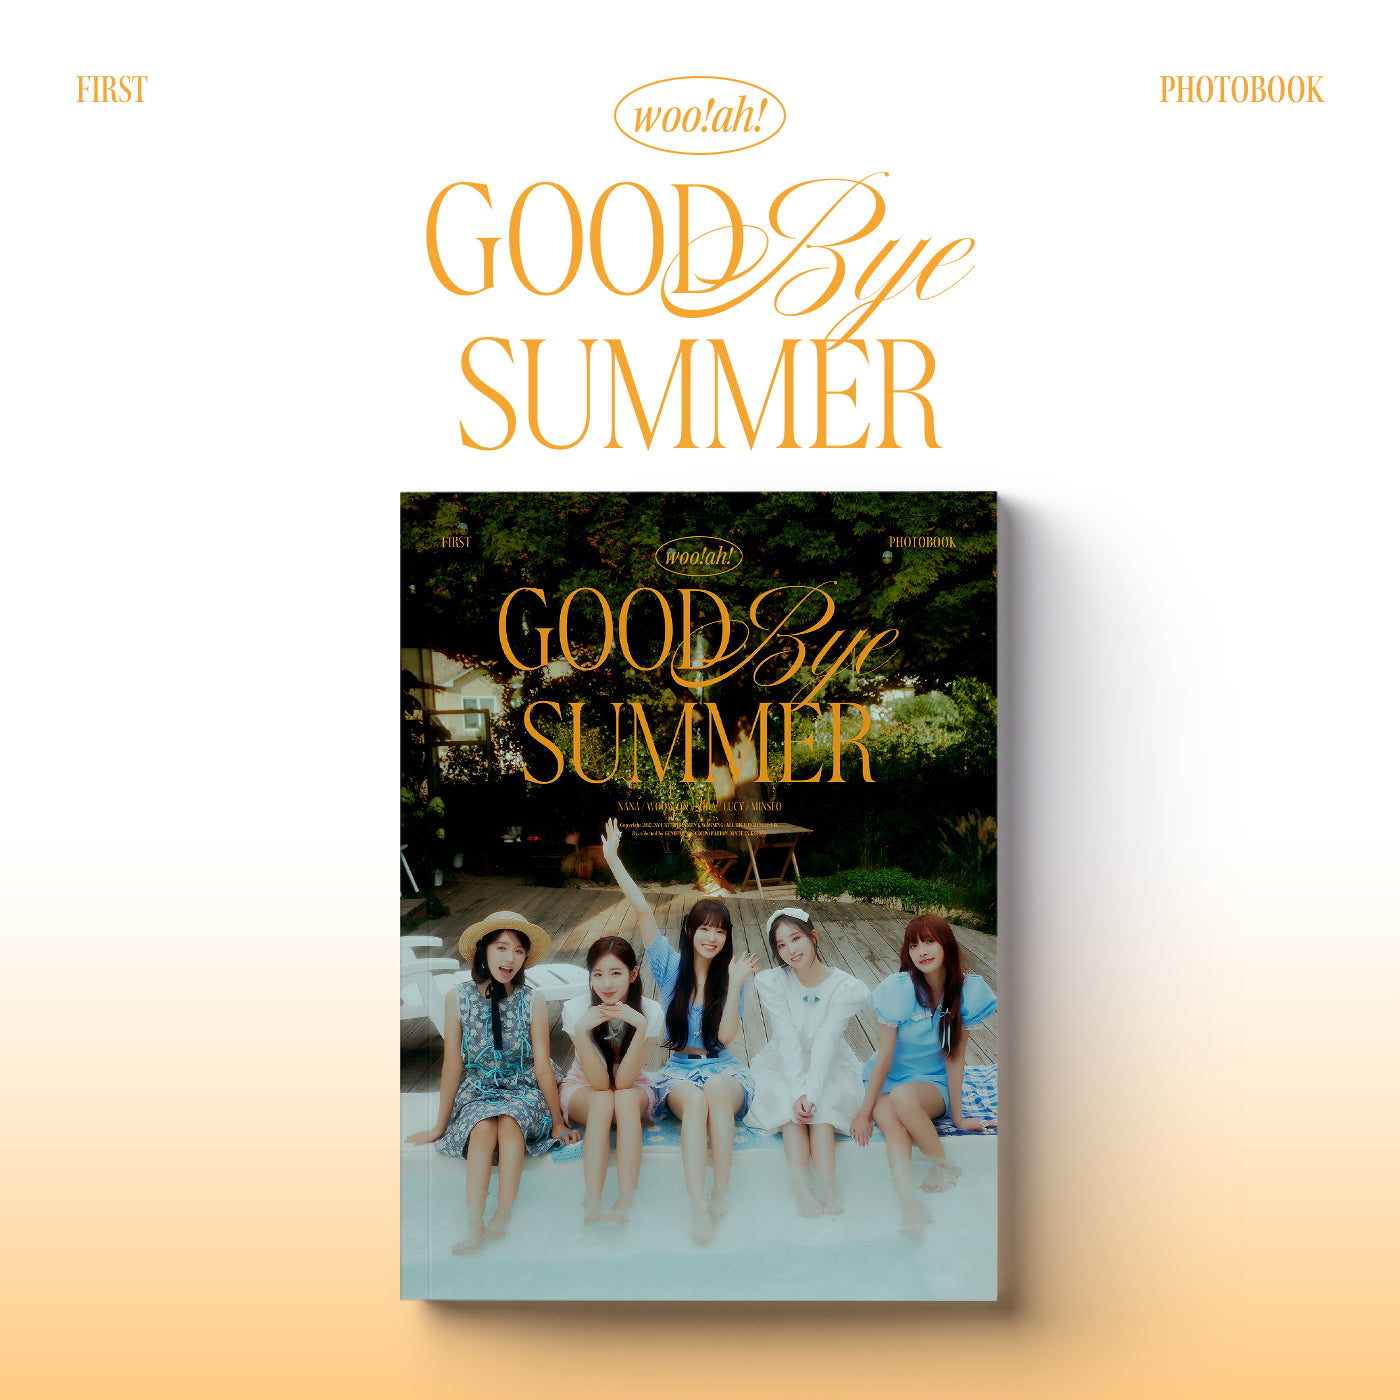 WOO!AH! 1ST PHOTOBOOK 'GOODBYE SUMMER' COVER